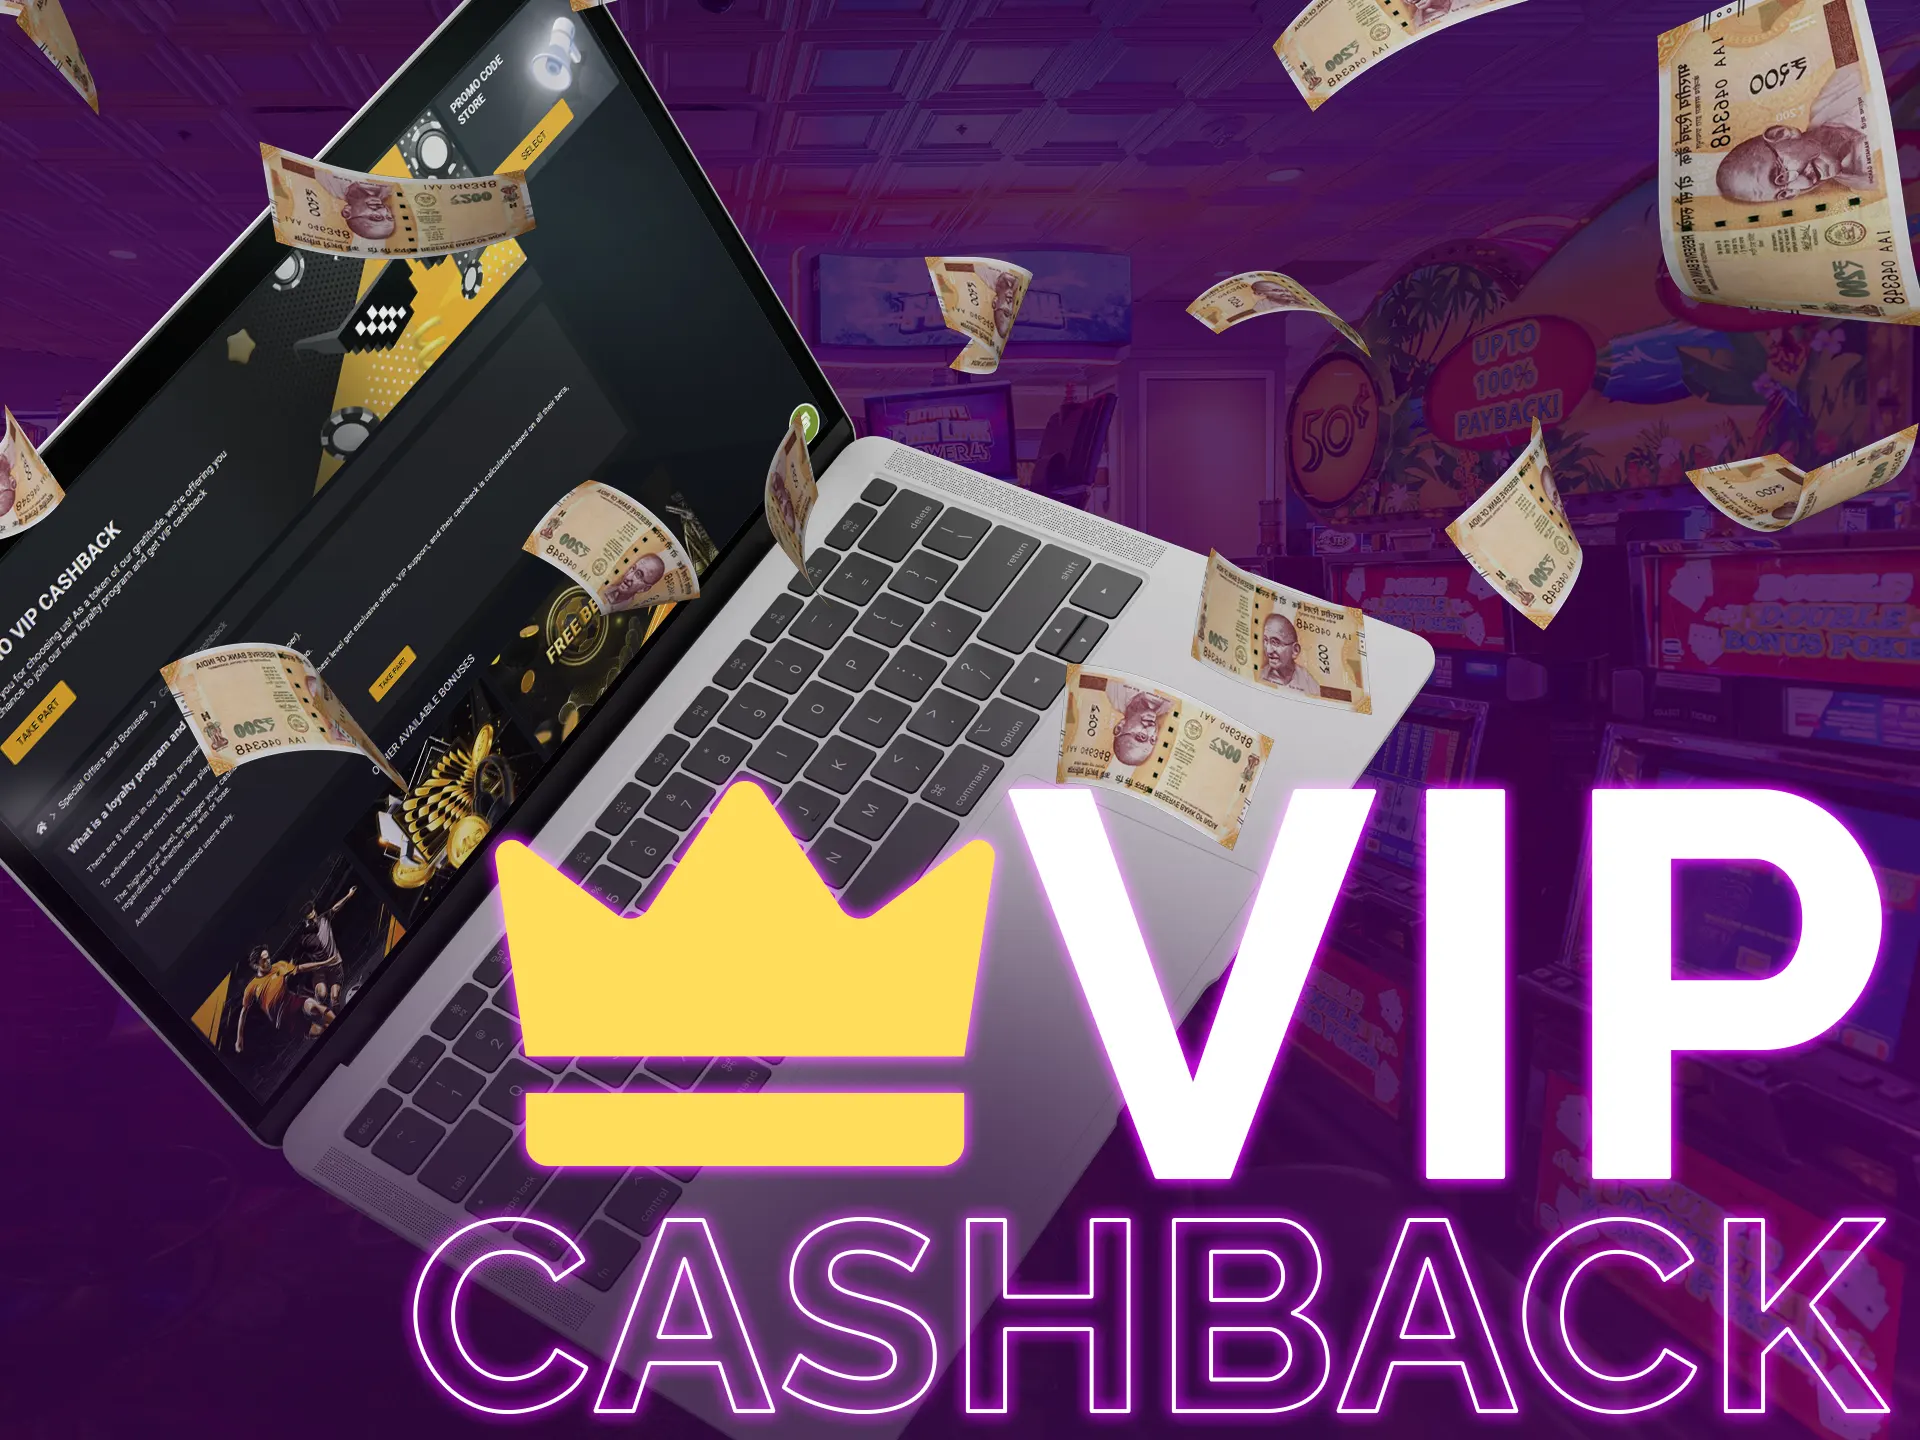 You can get bigger amounts of money back with VIP cashback bonus.